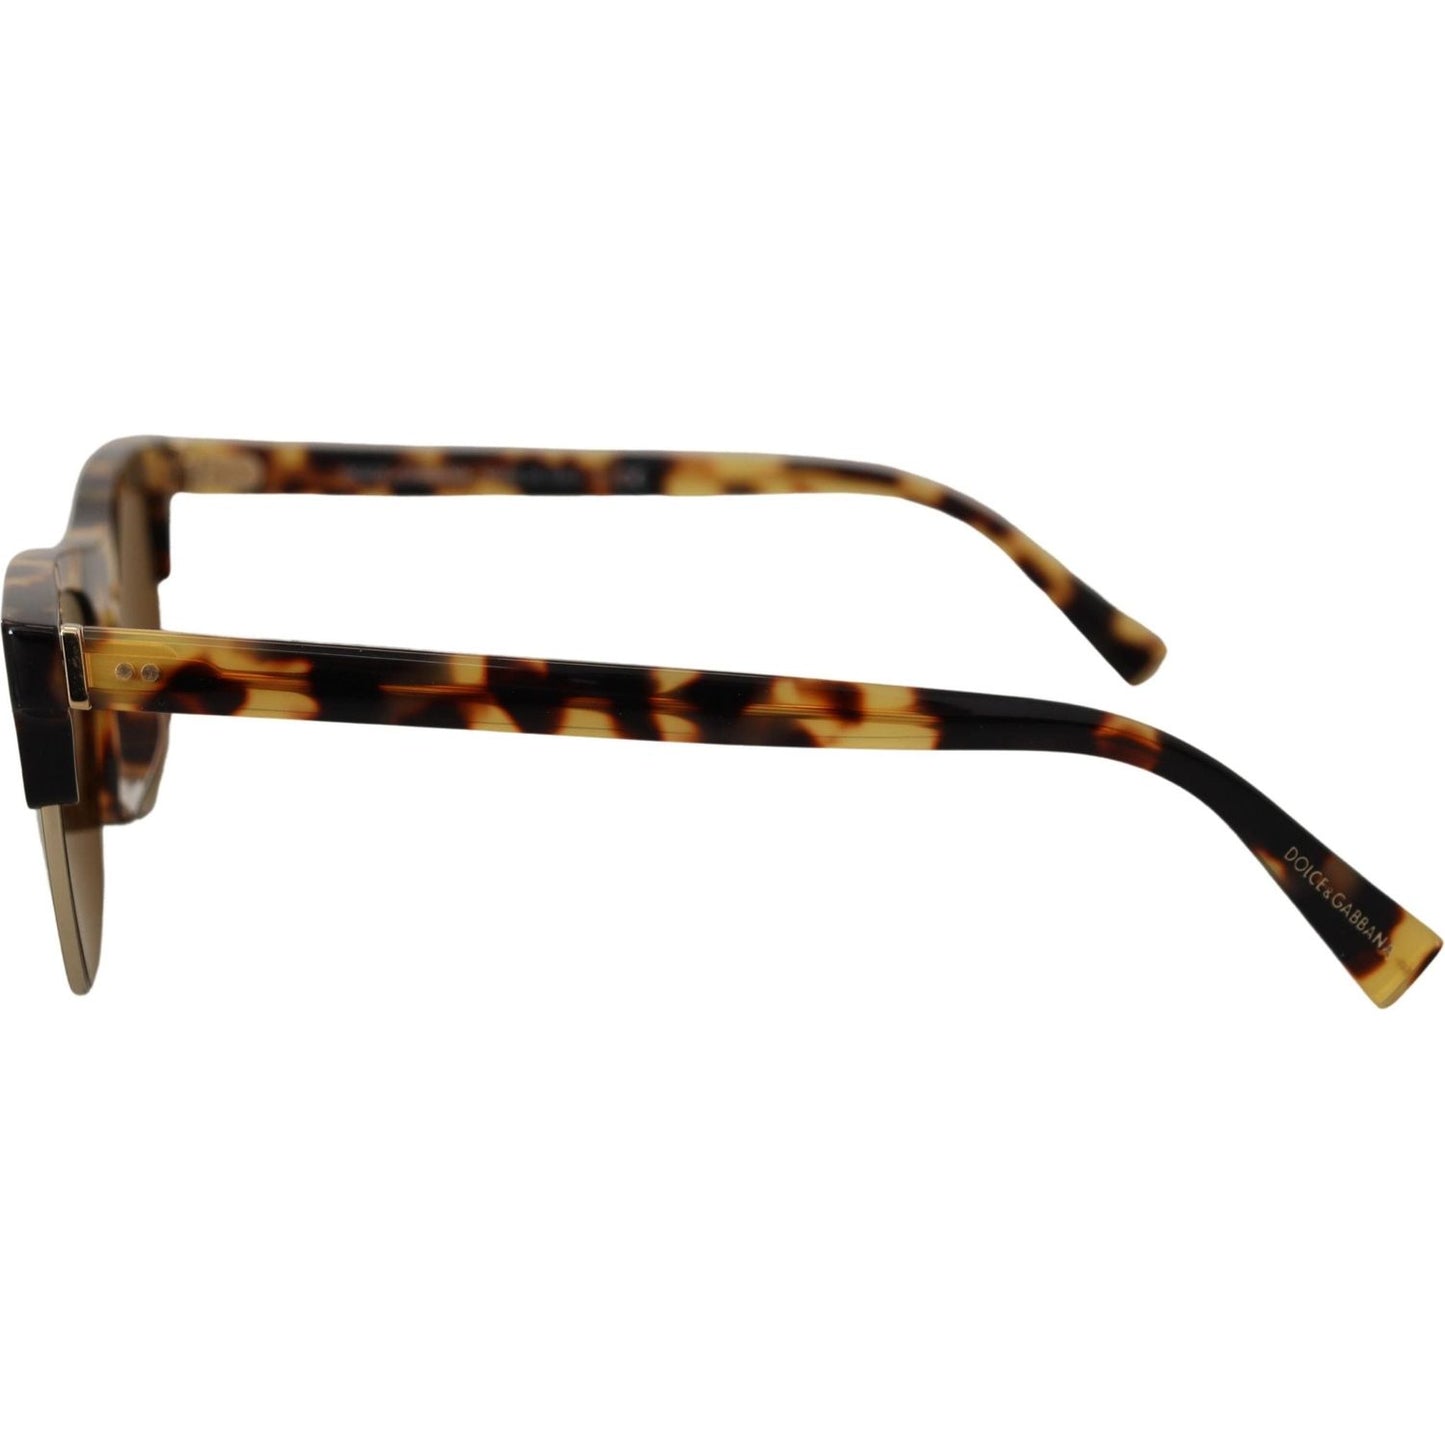 Dolce & Gabbana Chic Acetate Designer Sunglasses brown-gold-acetate-havana-dg430a-sunglasses